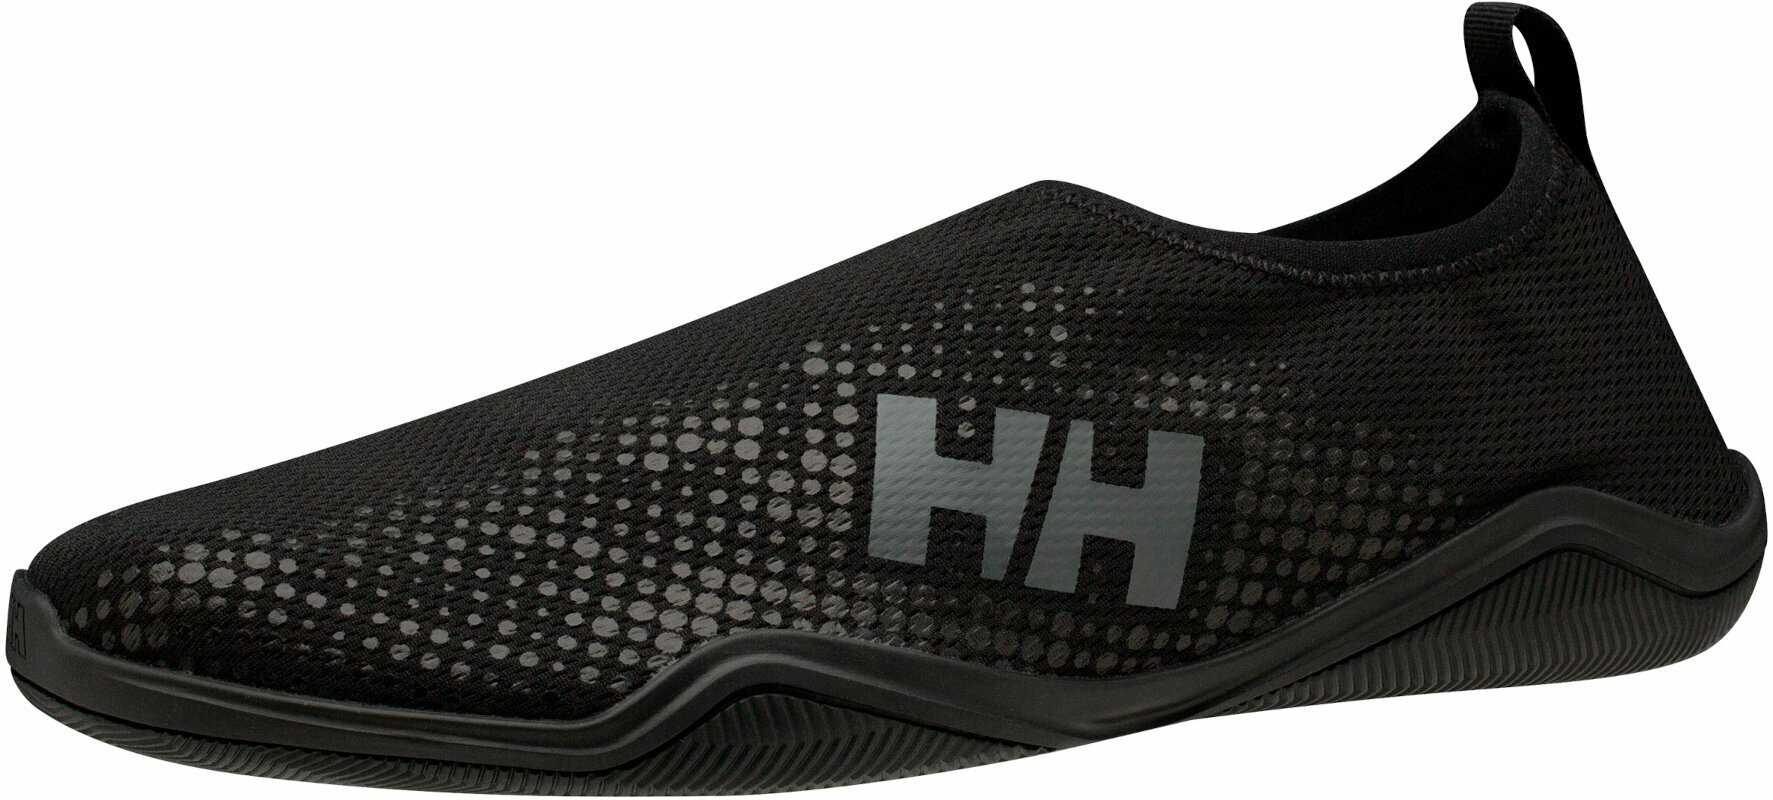 Herrenschuhe Helly Hansen Men's Crest Watermoc Black/Charcoal 45